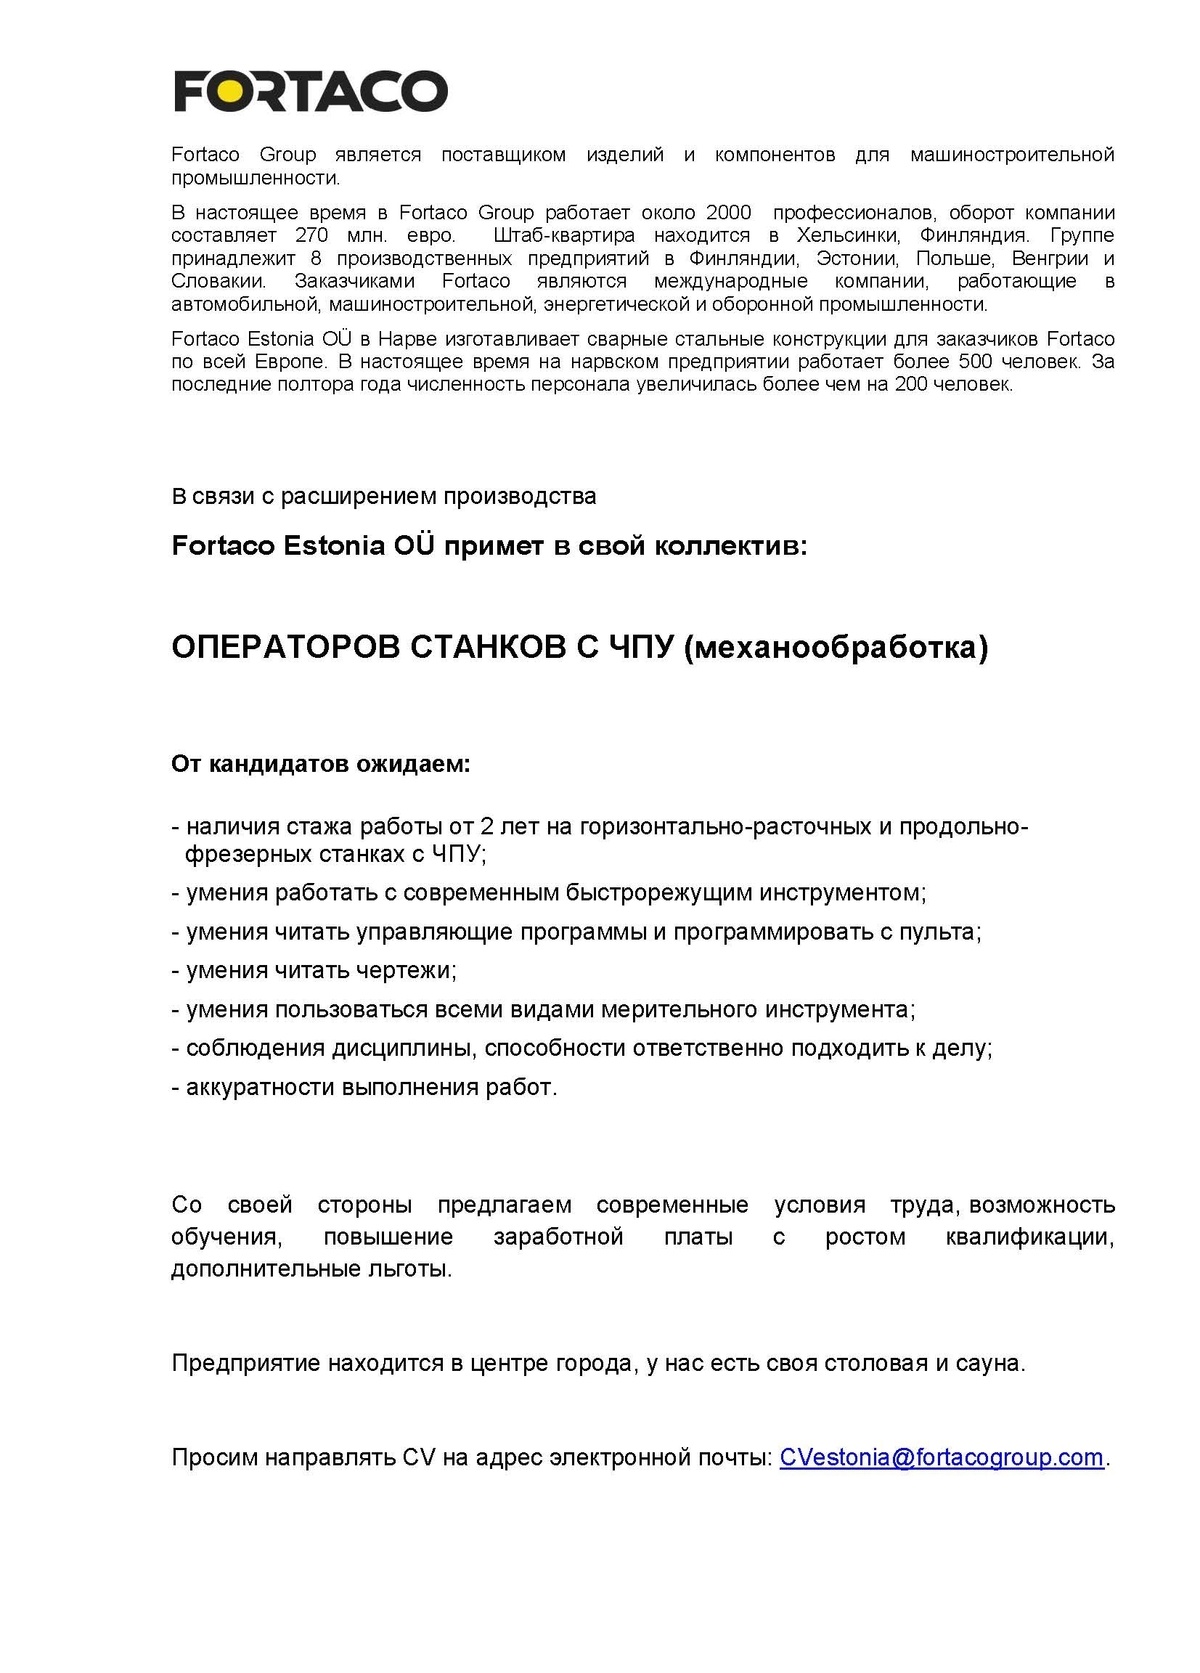 Fortaco Estonia OÜ Оператор станков с ЧПУ (CNC)